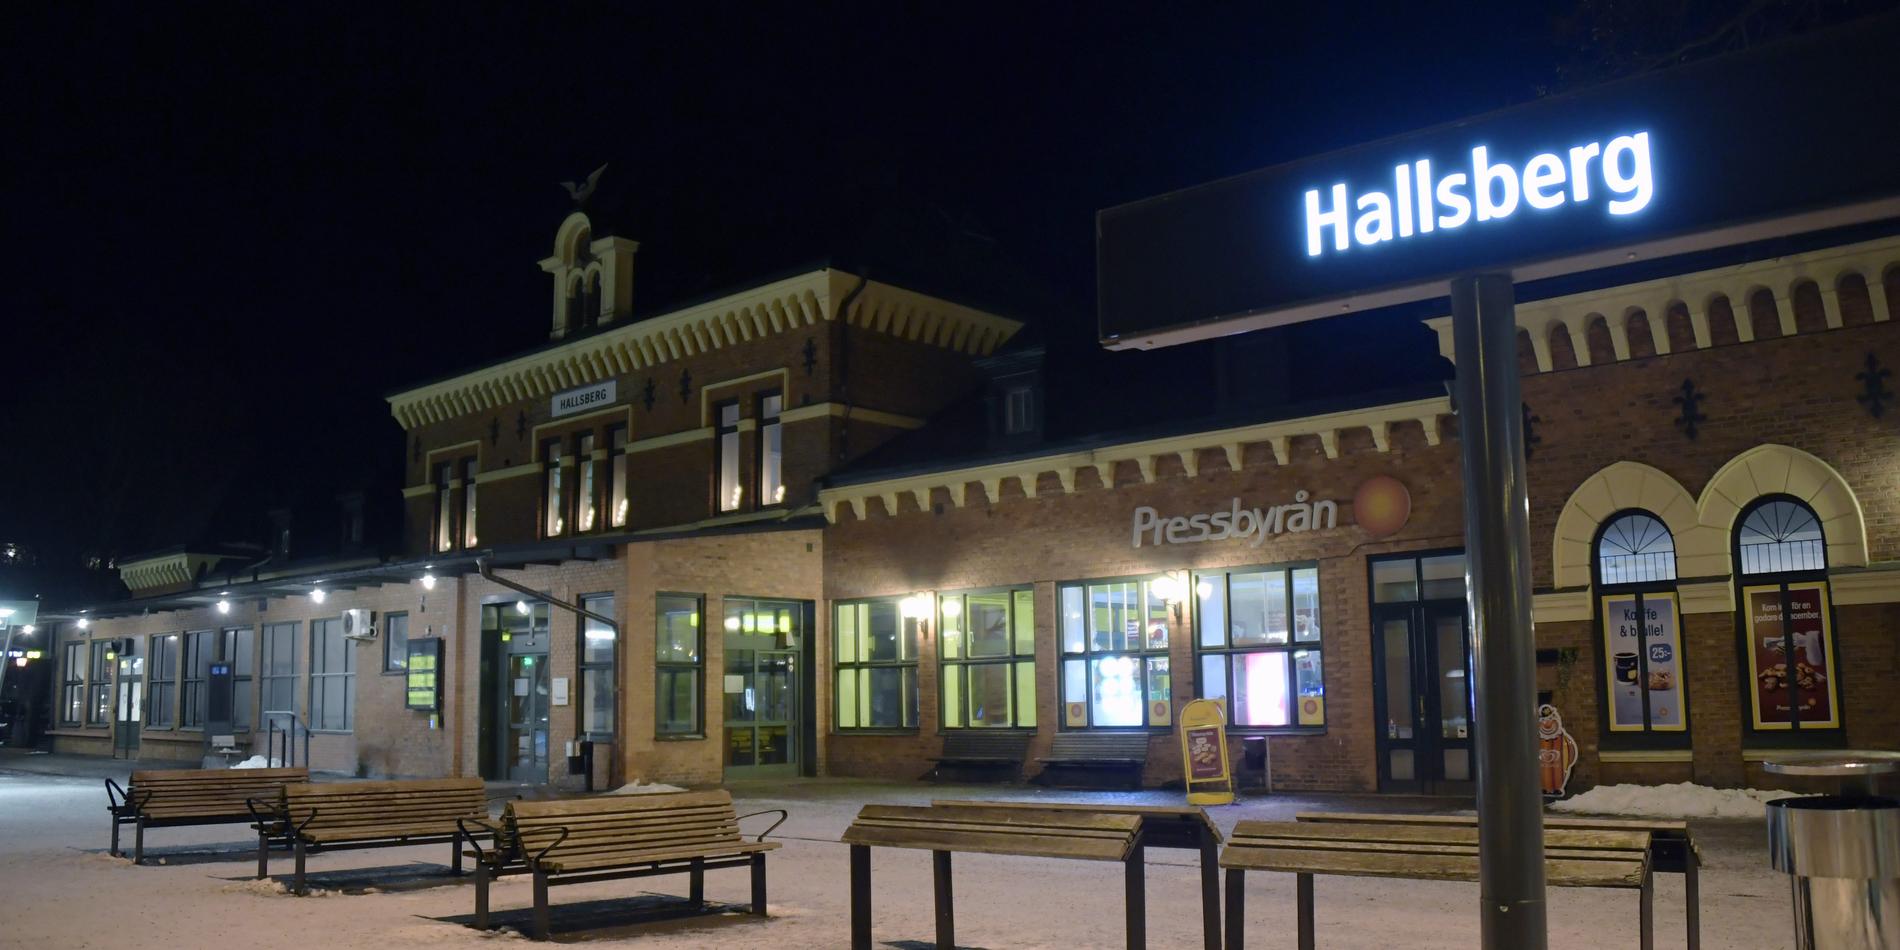 Hallsbergs station.